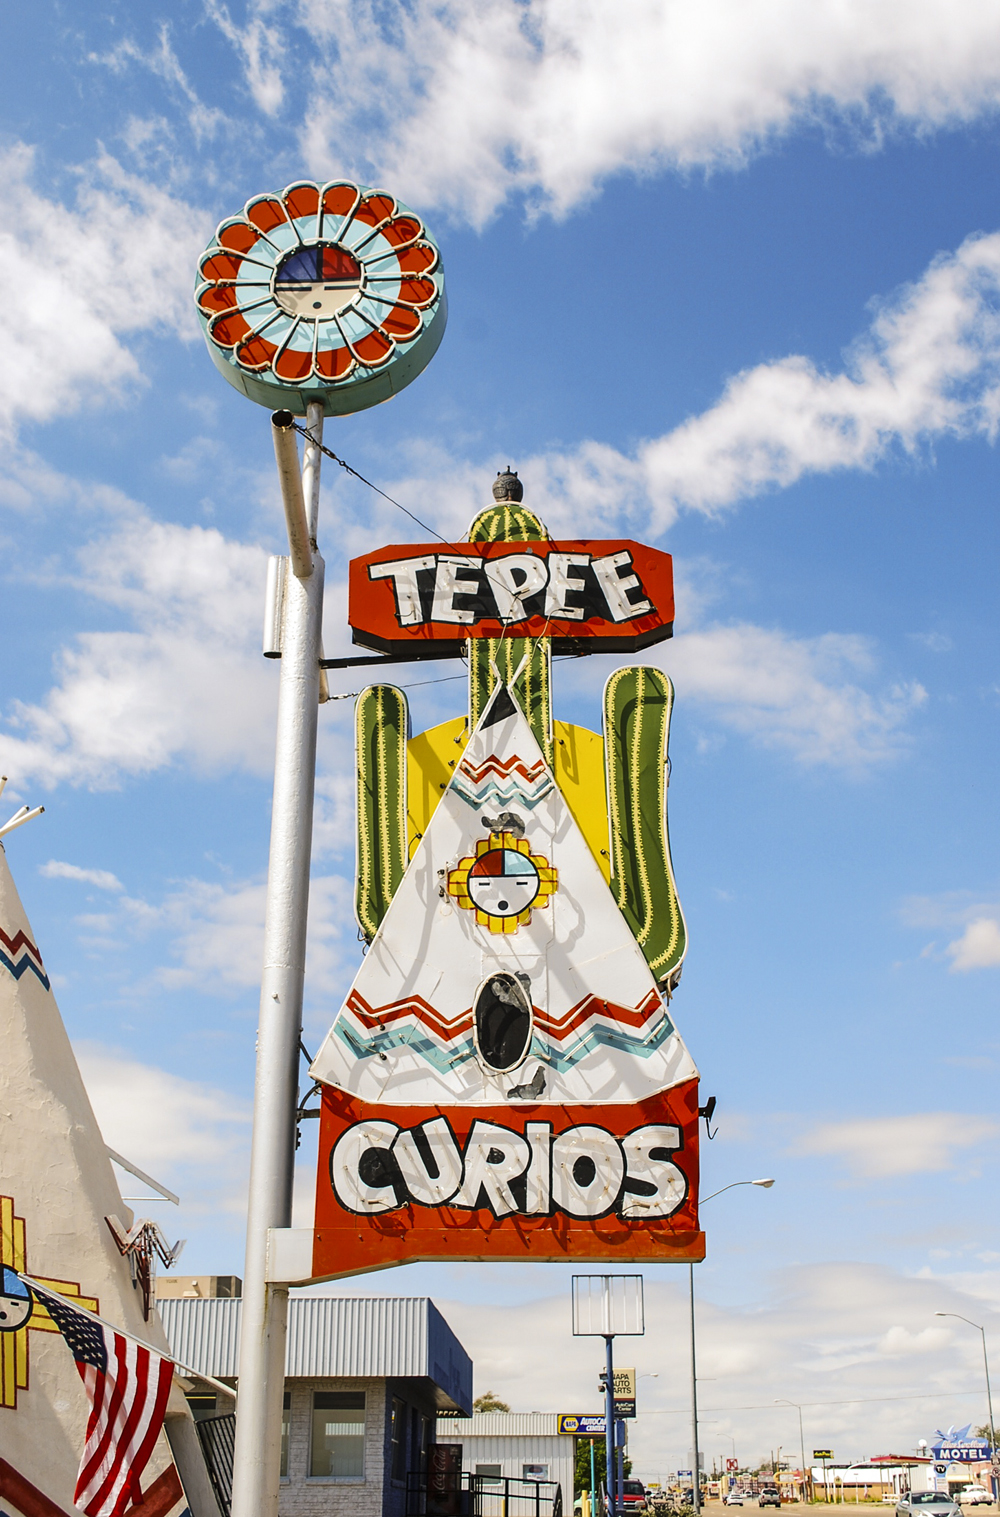 photograph of the Tee Pee Curios sign in Tucumcari, New Mexico